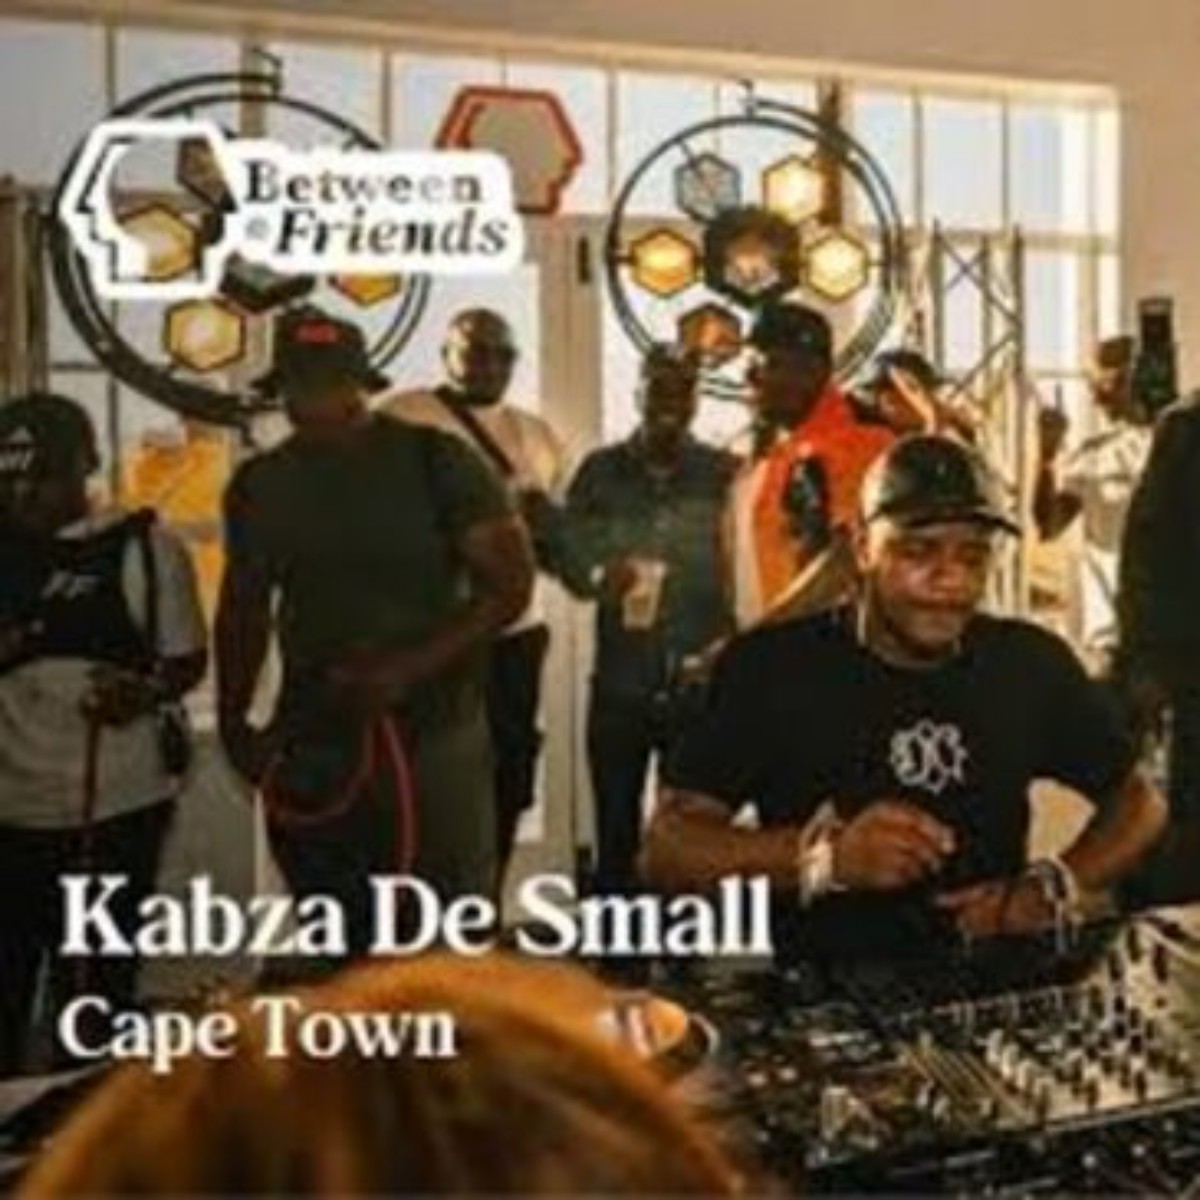 Kabza De Small Between Friends x Klipdrift Video Download Hiphopza